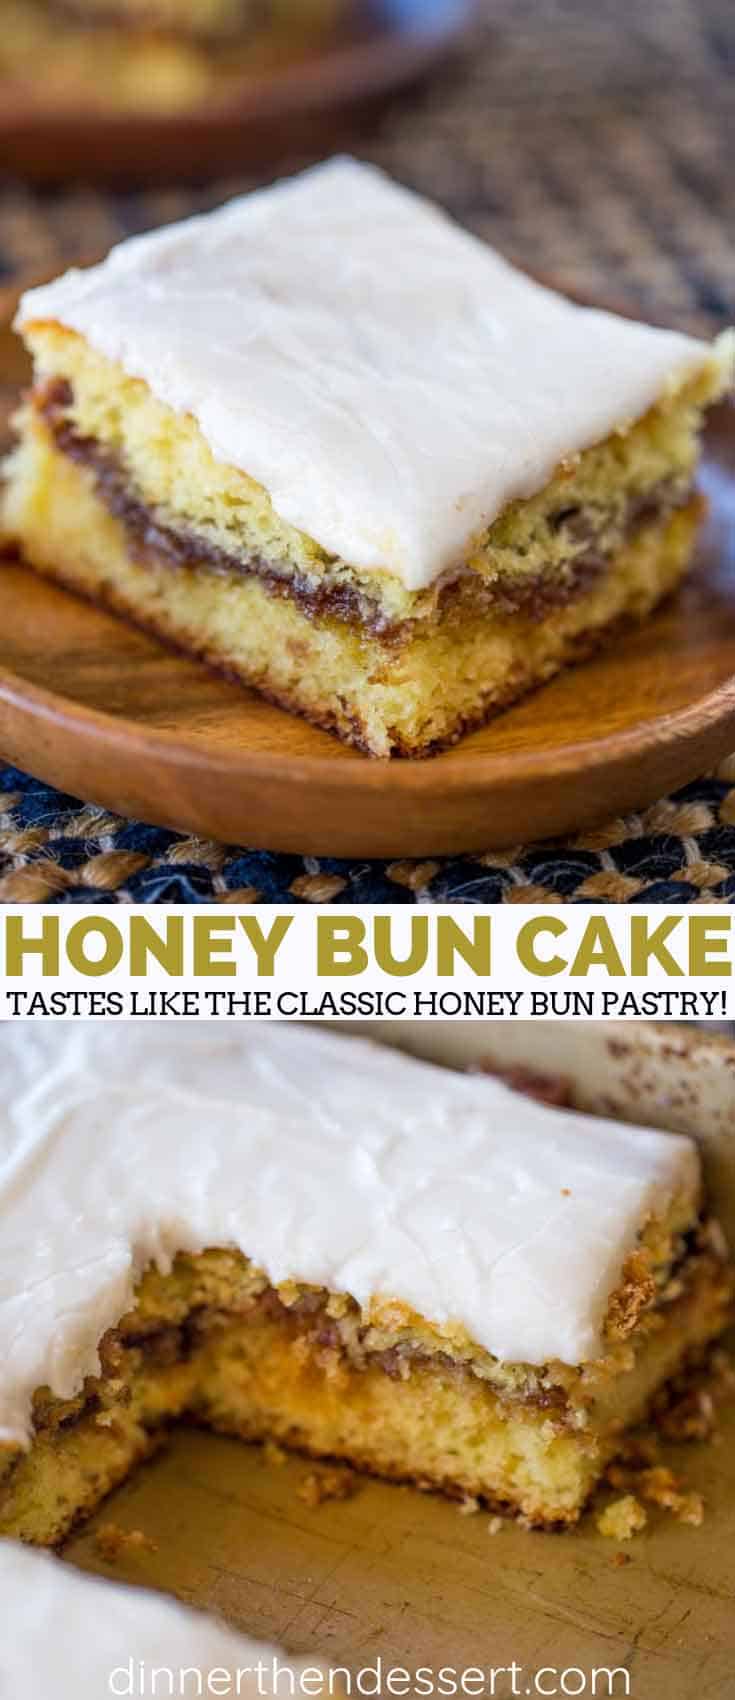 Classic Honey Bun Cake